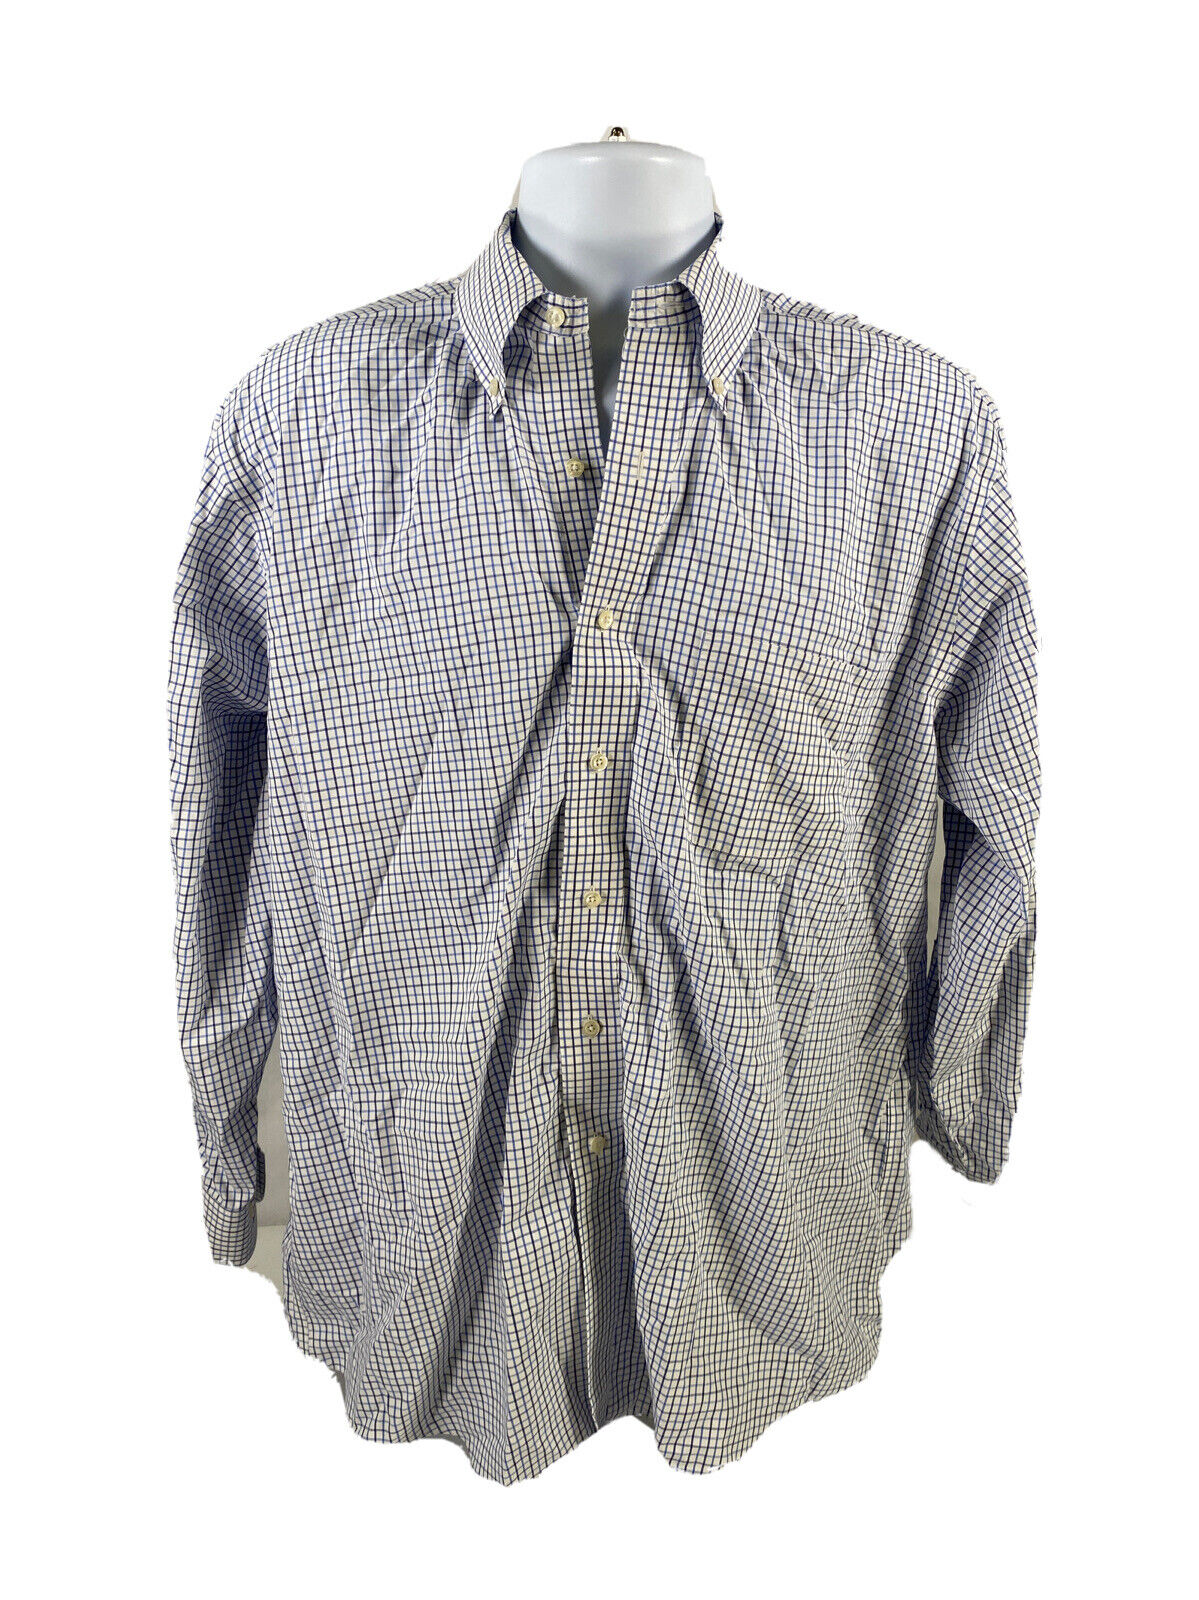 Brooks Brothers 346 Men's White/Blue Original Polo Button Up Shirt - 16.5